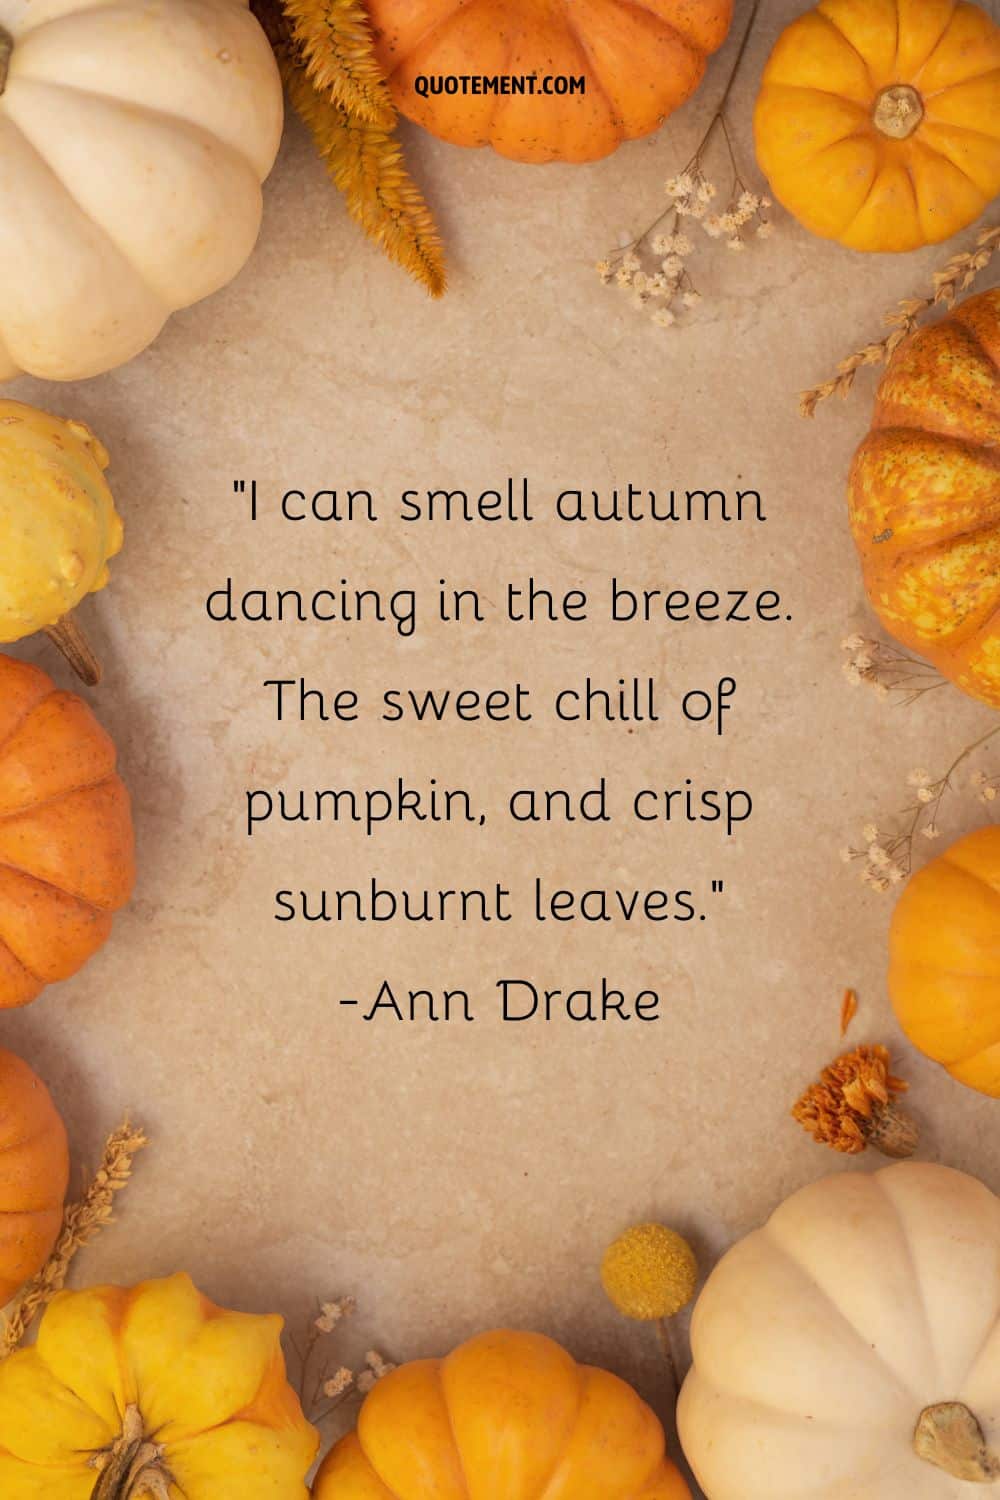 Fall's finest pumpkins on display representing cute pumpkin quote.
